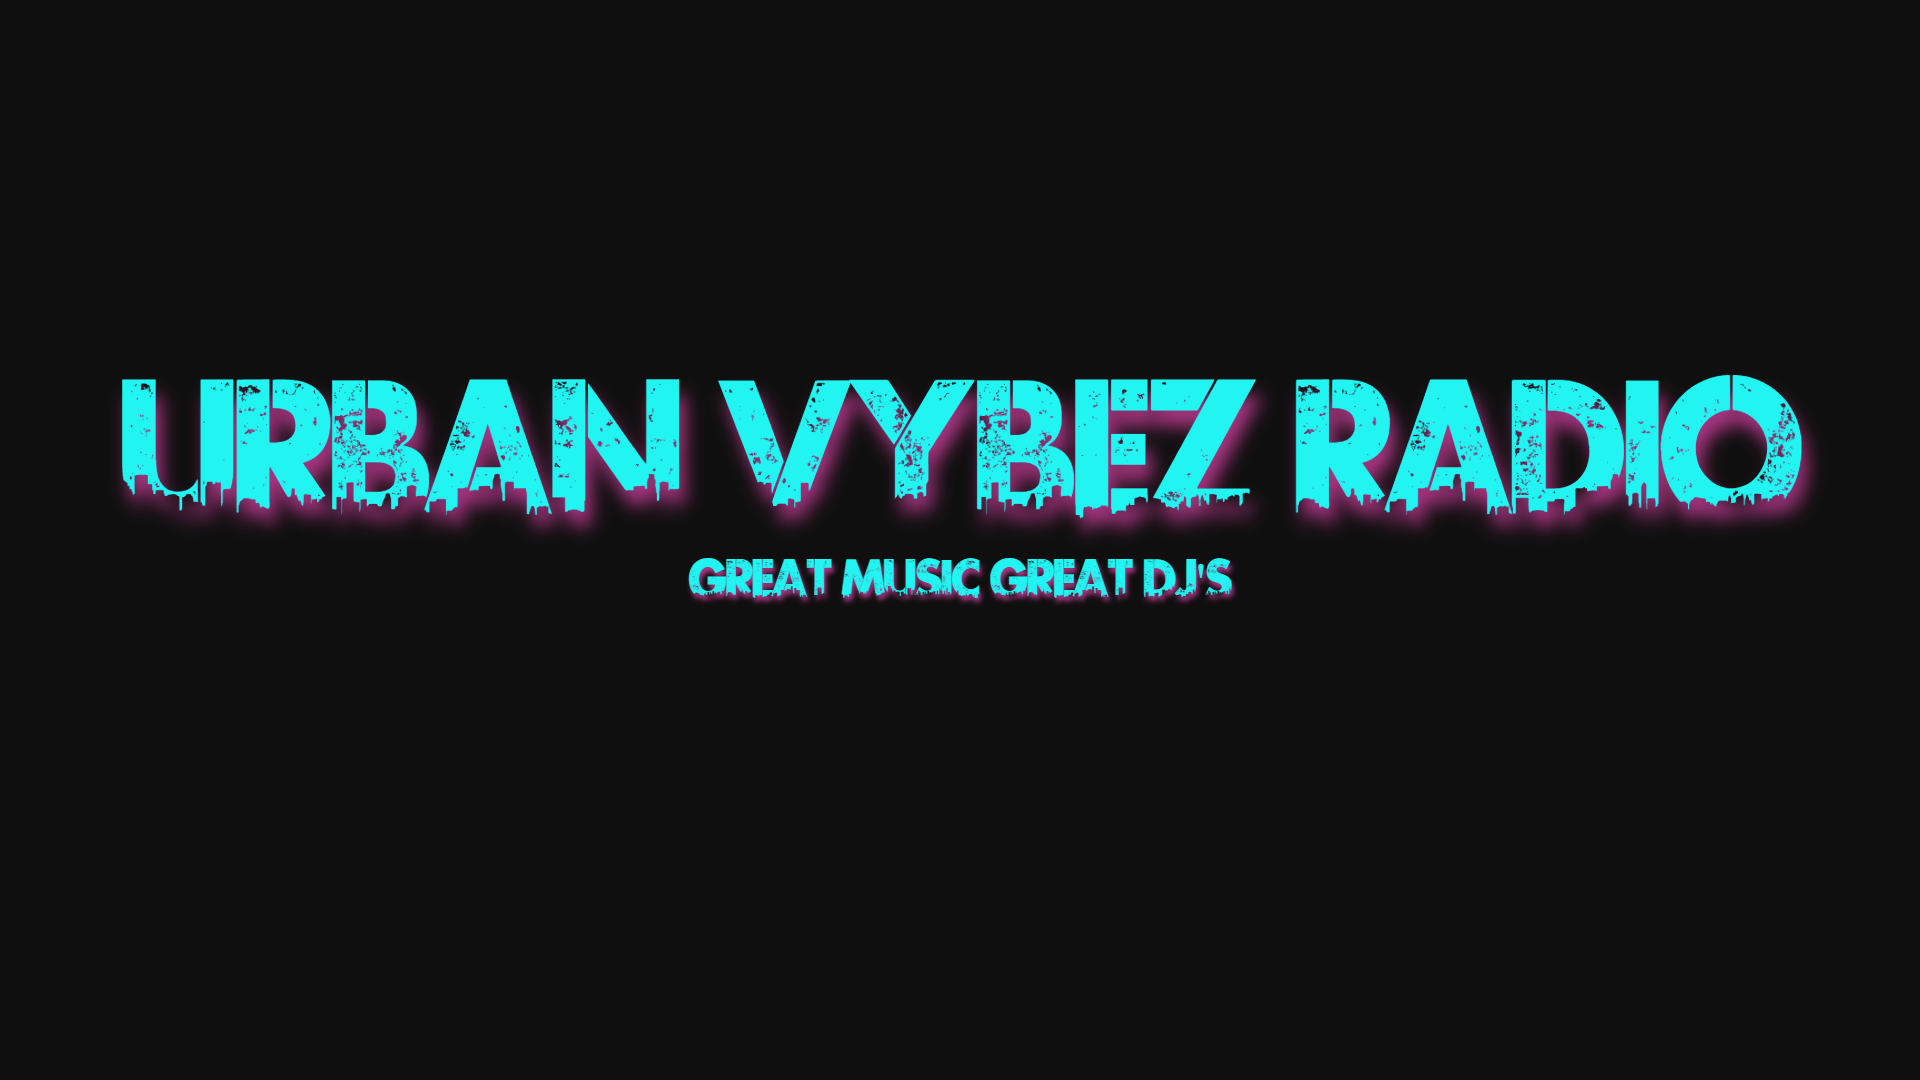 Urban Vybez Radio